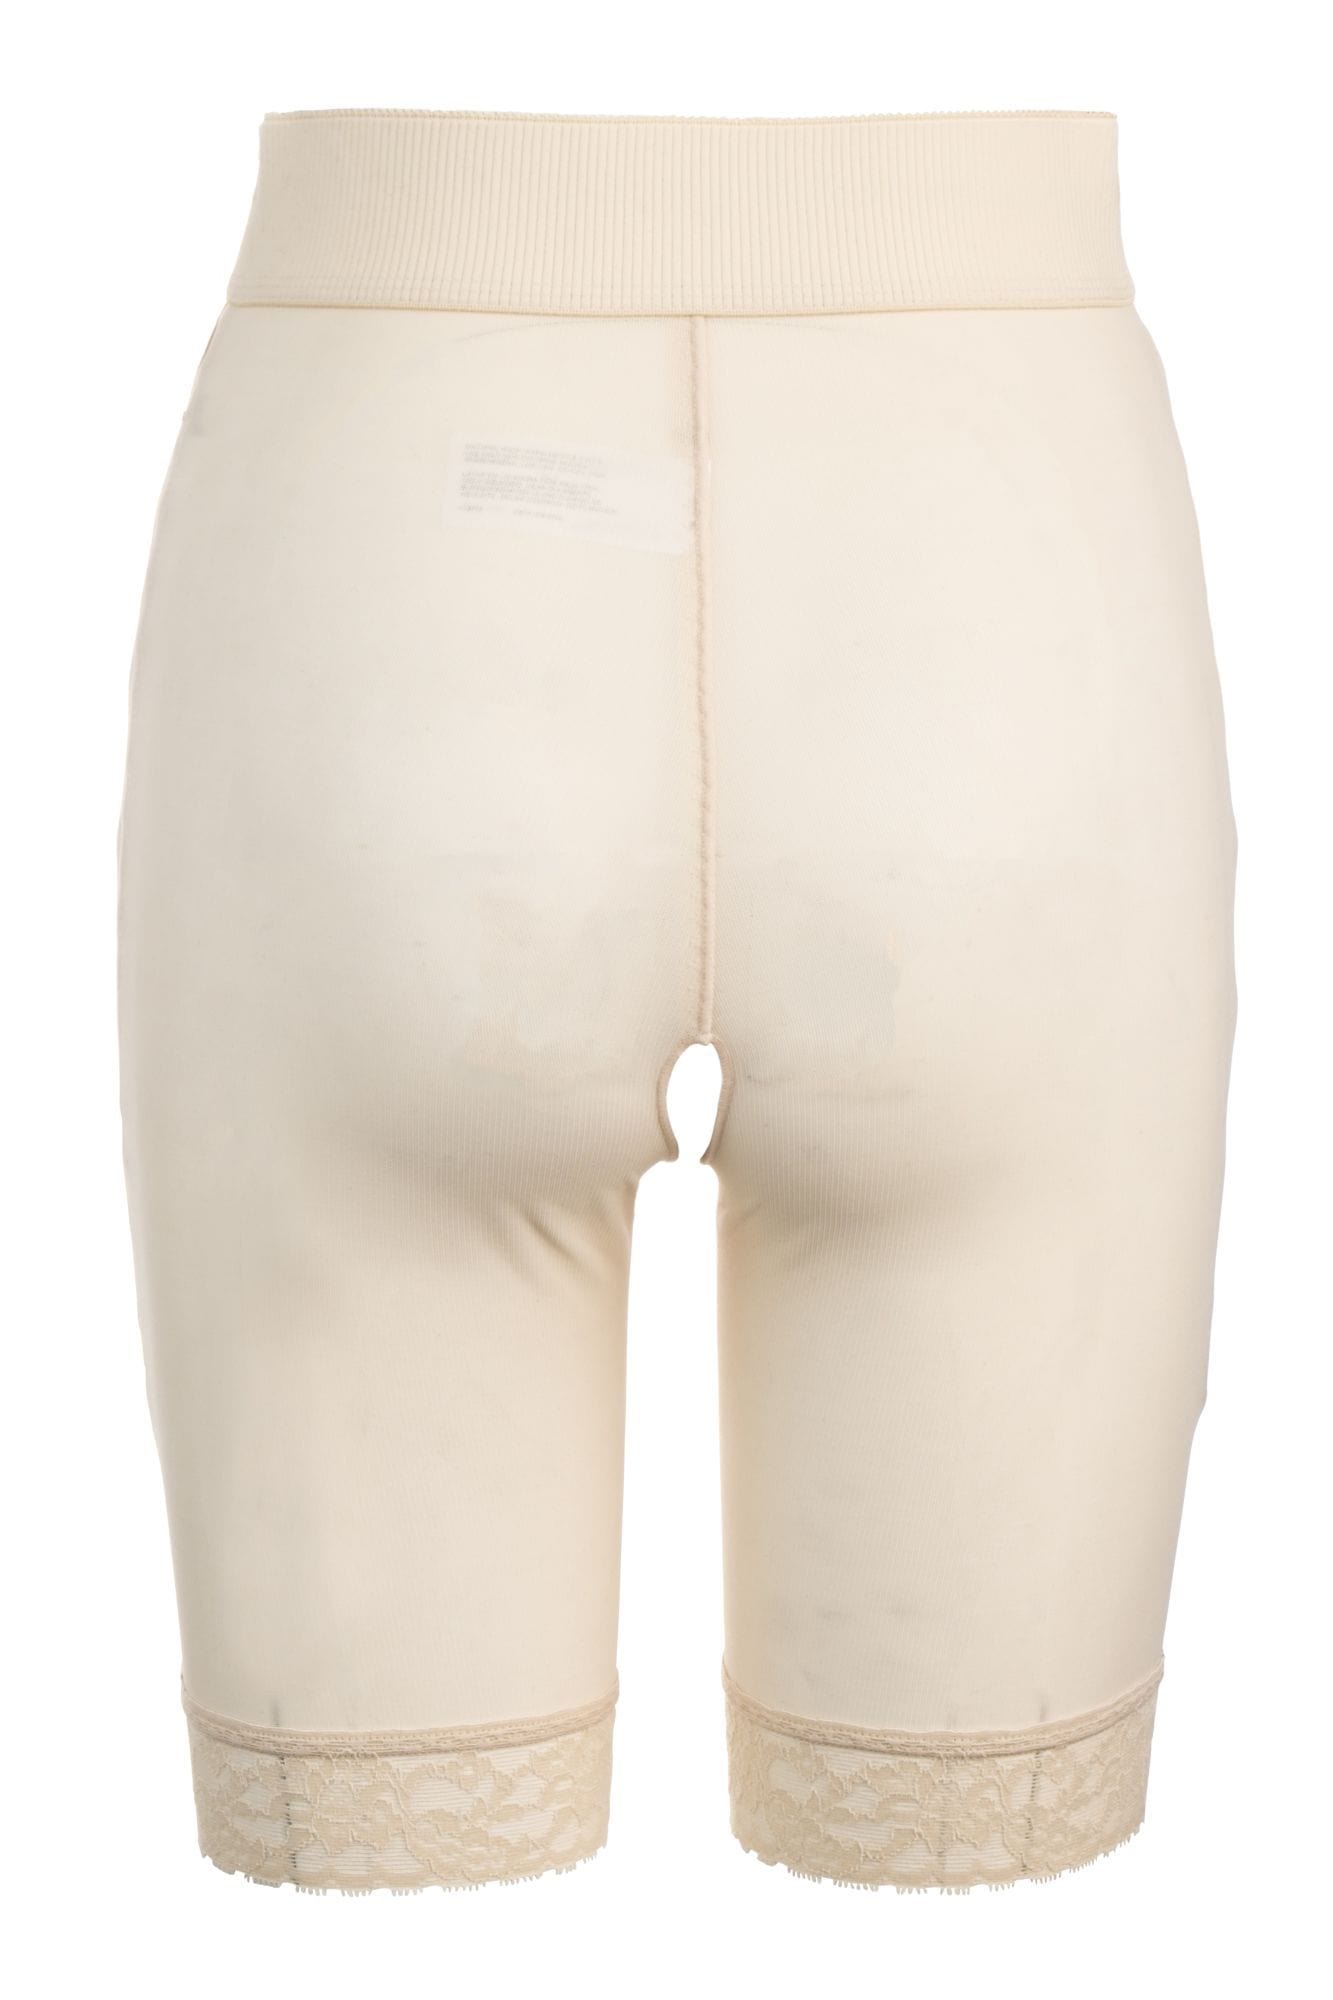 Cocoon High Waist Long Leg Panty Girdle Style 2101  High waisted panties,  Panty girdle, Women's shapewear